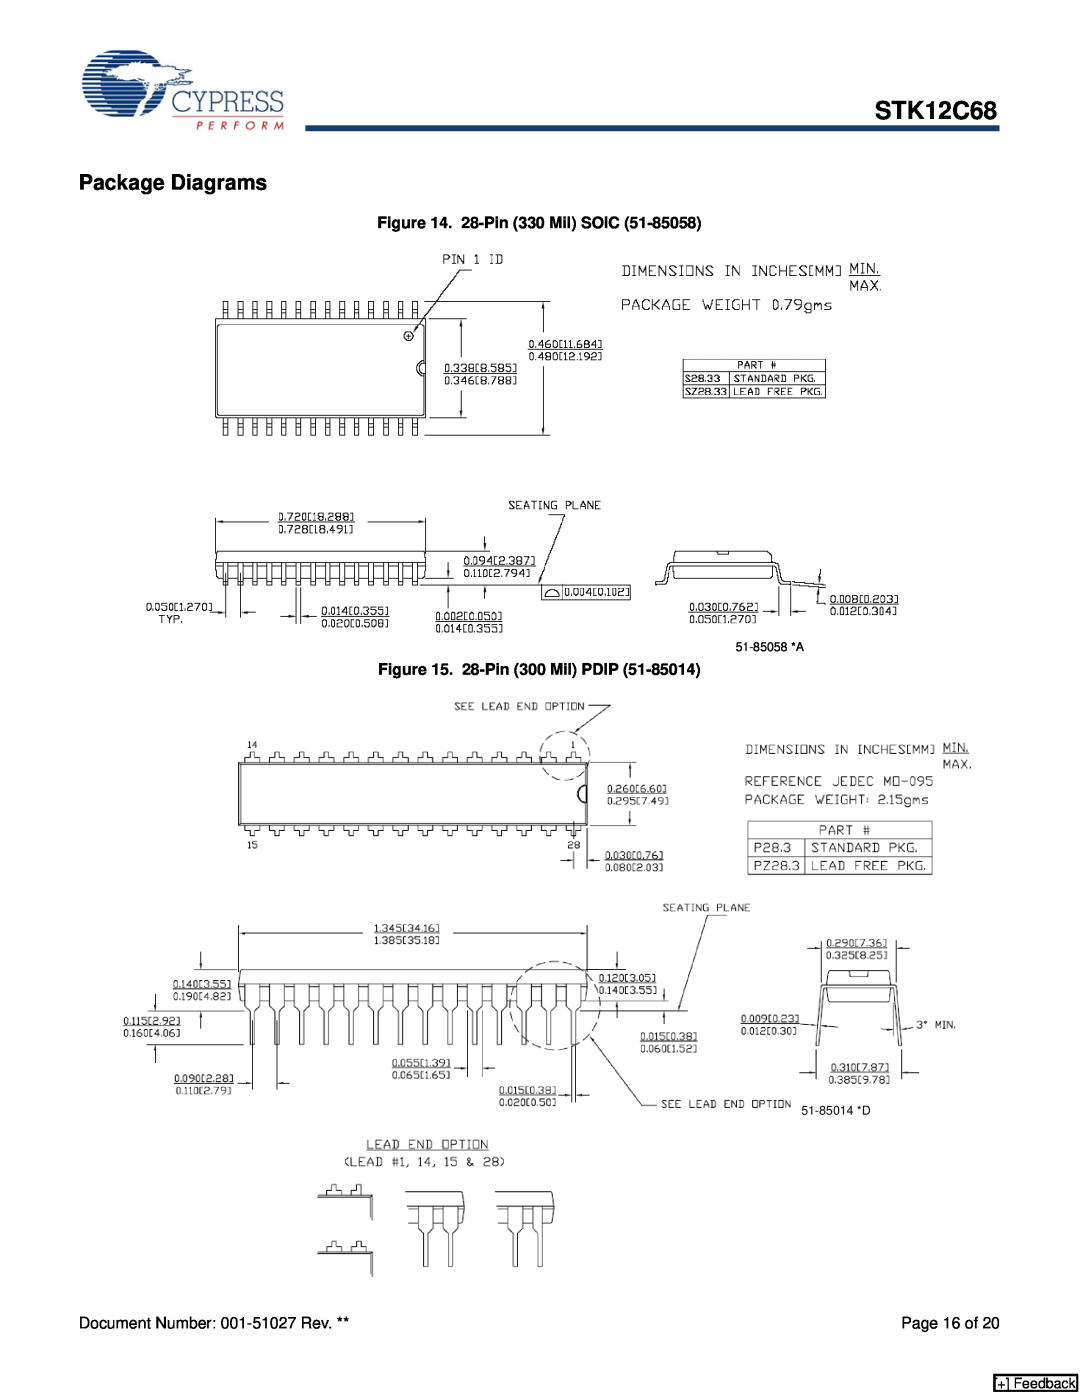 Cypress STK12C68 manual Package Diagrams, 28-Pin 330 Mil SOIC, 28-Pin 300 Mil PDIP, + Feedback 